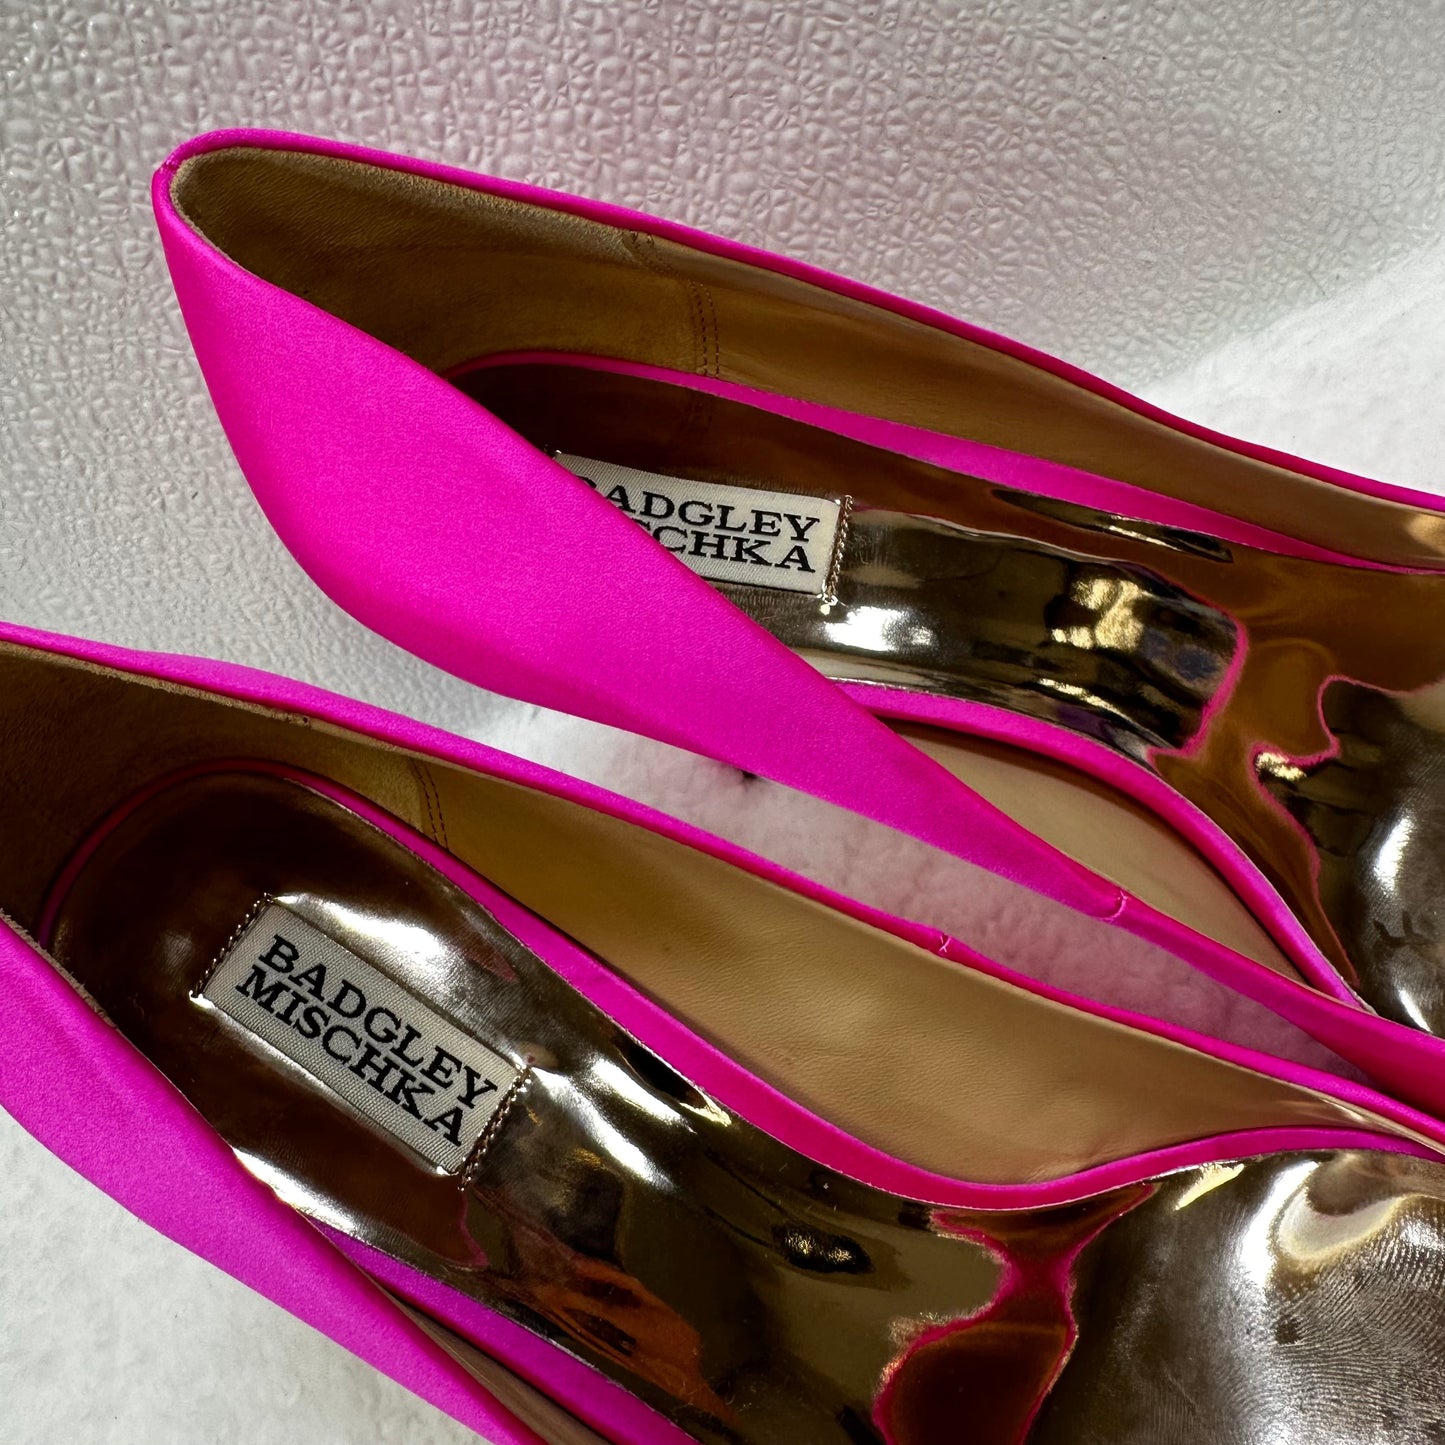 Hot Pink Shoes Heels Stiletto Badgley Mischka, Size 13